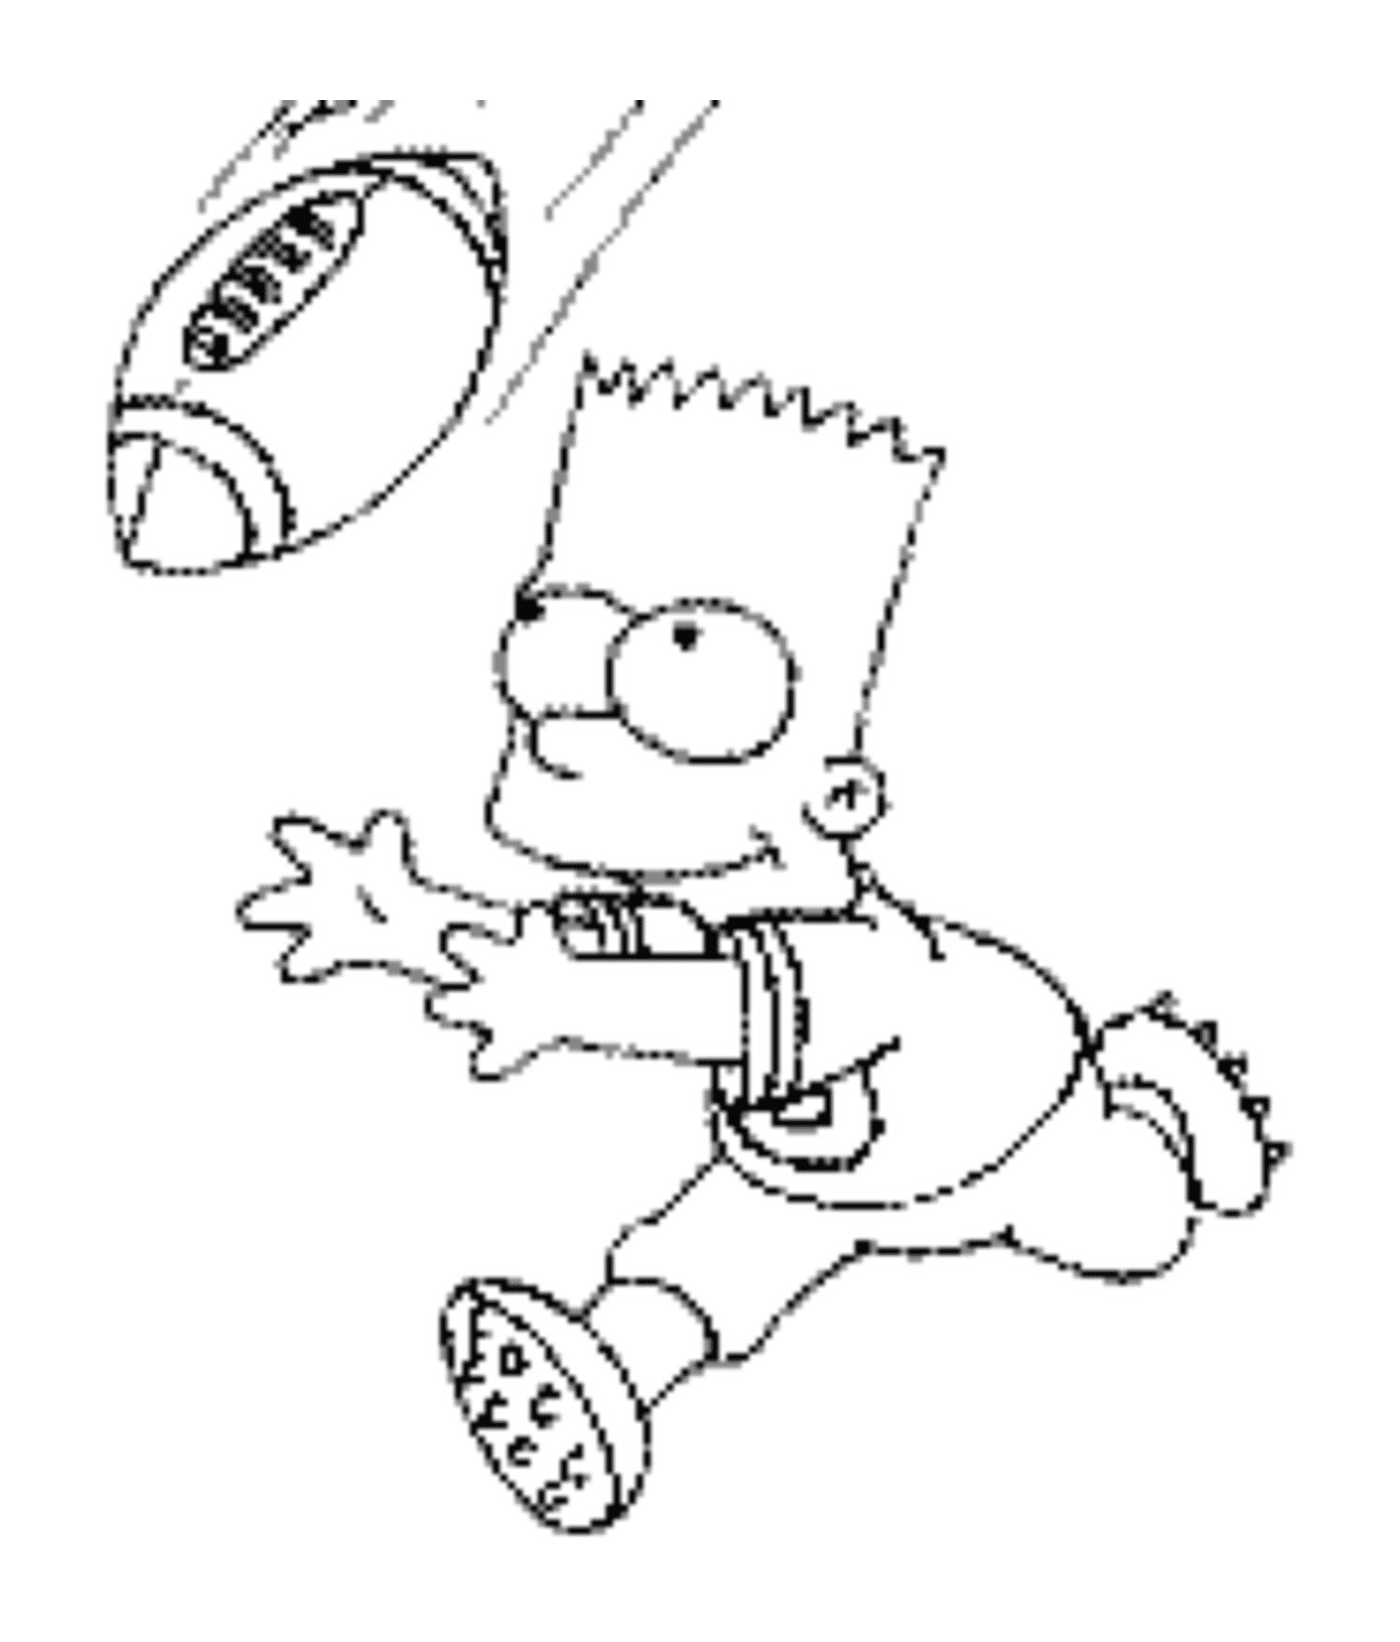  Bart joga futebol americano 